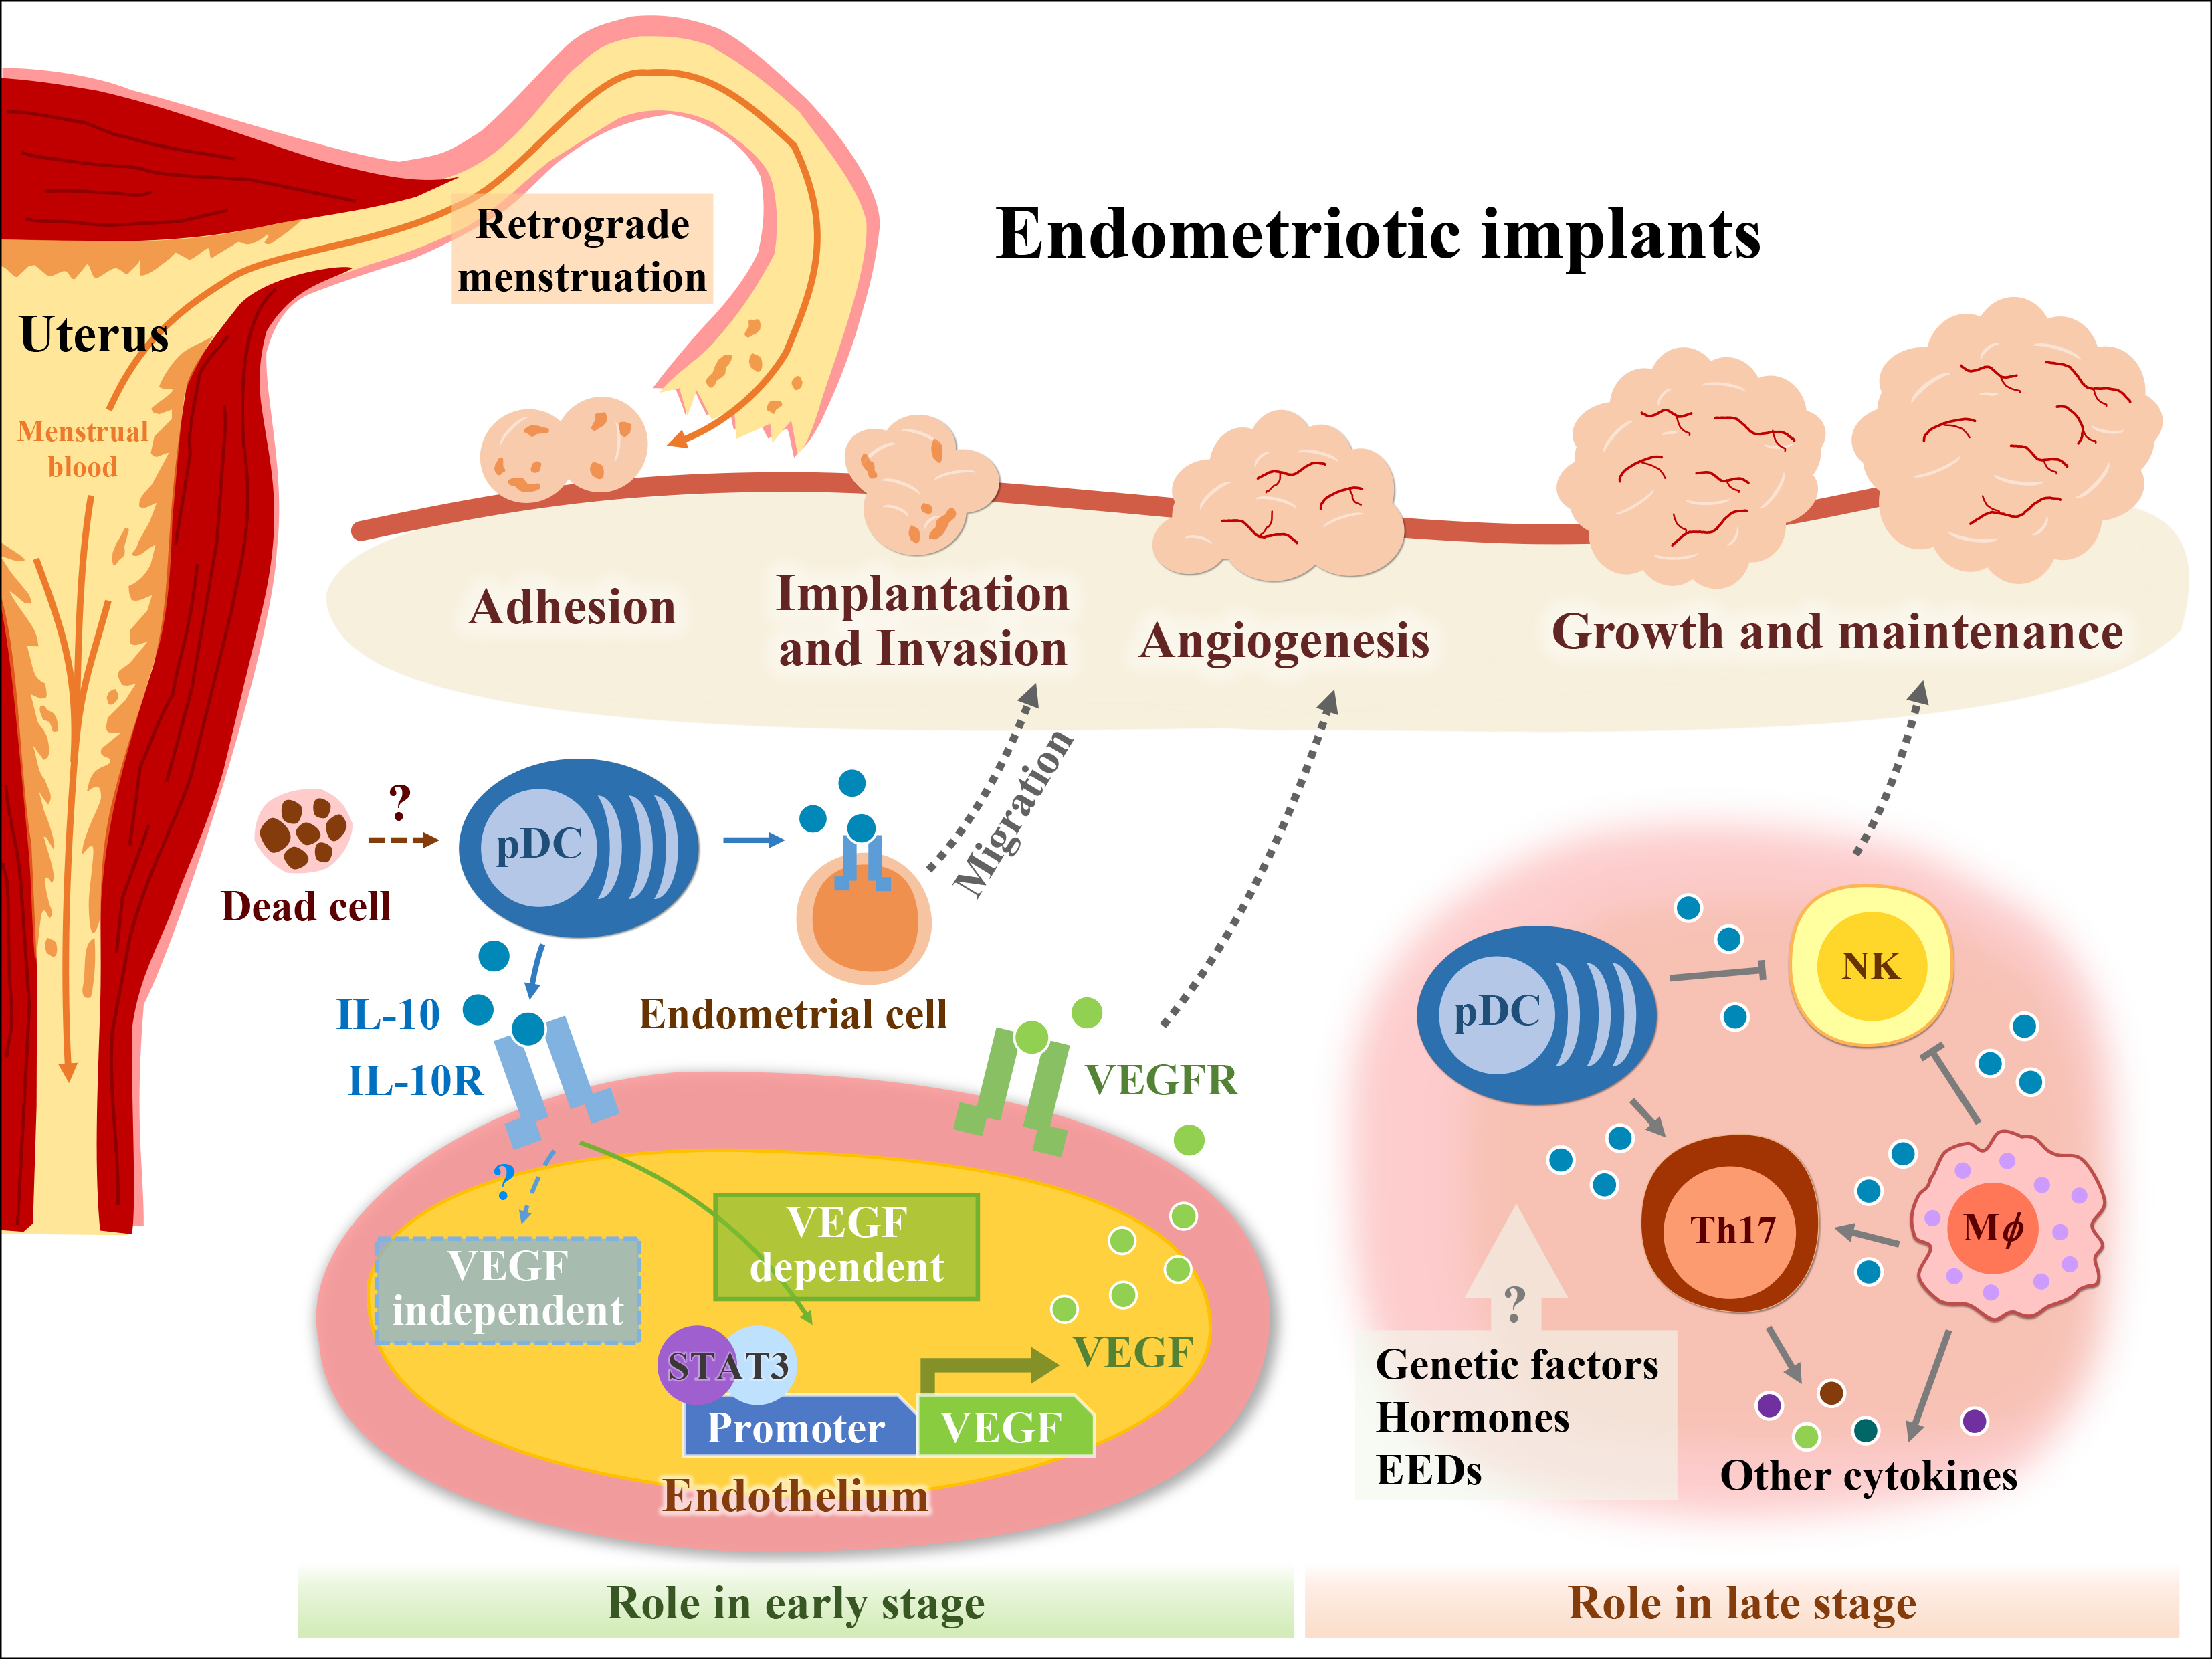 11 Endometriotic implants